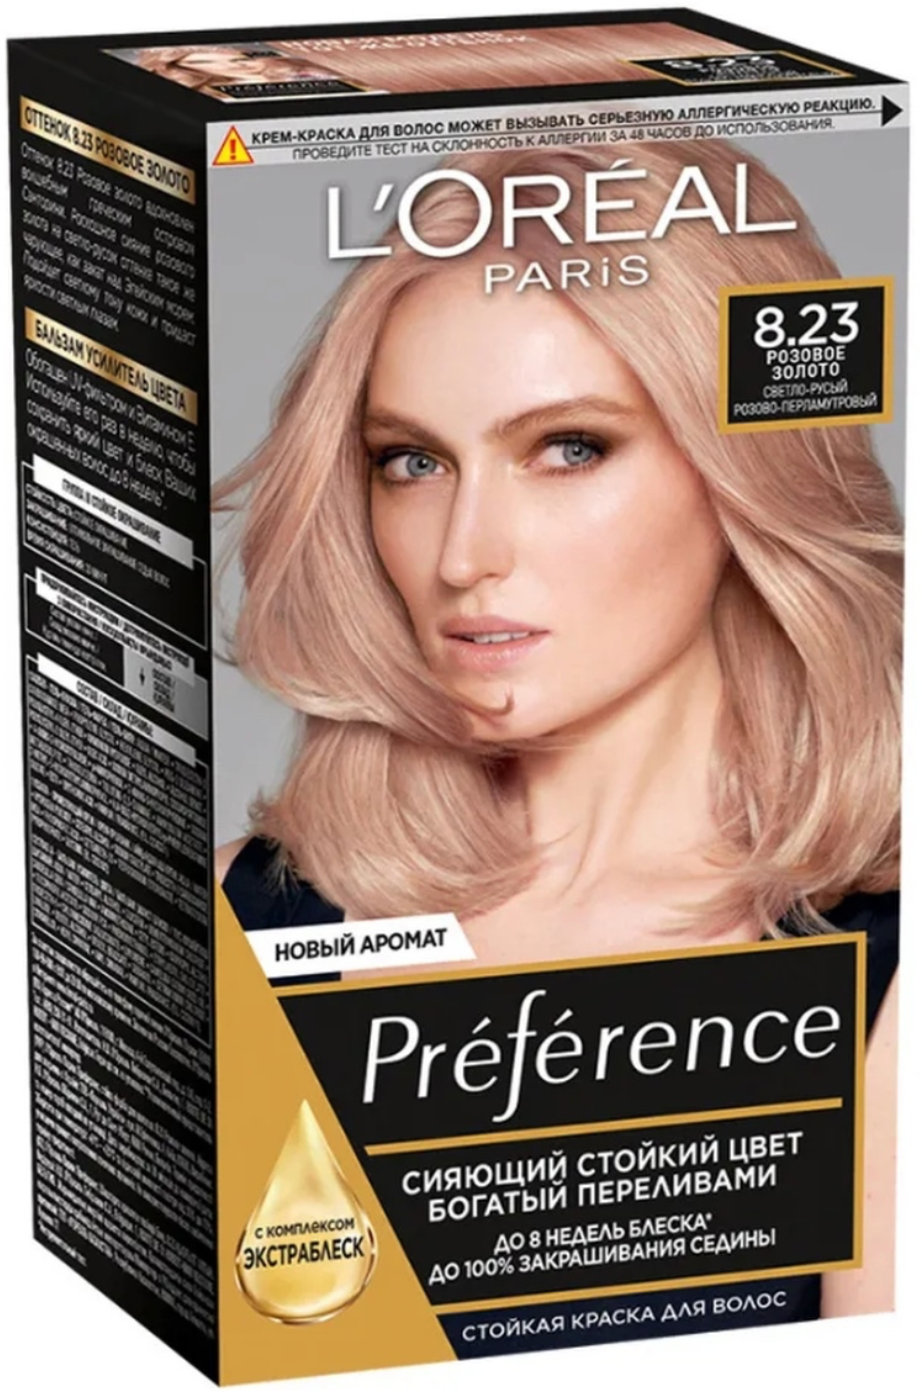 Лореаль Париж / L'Oreal Paris Preference Краска для волос 8.23 Розовое золото розово-перламутровый